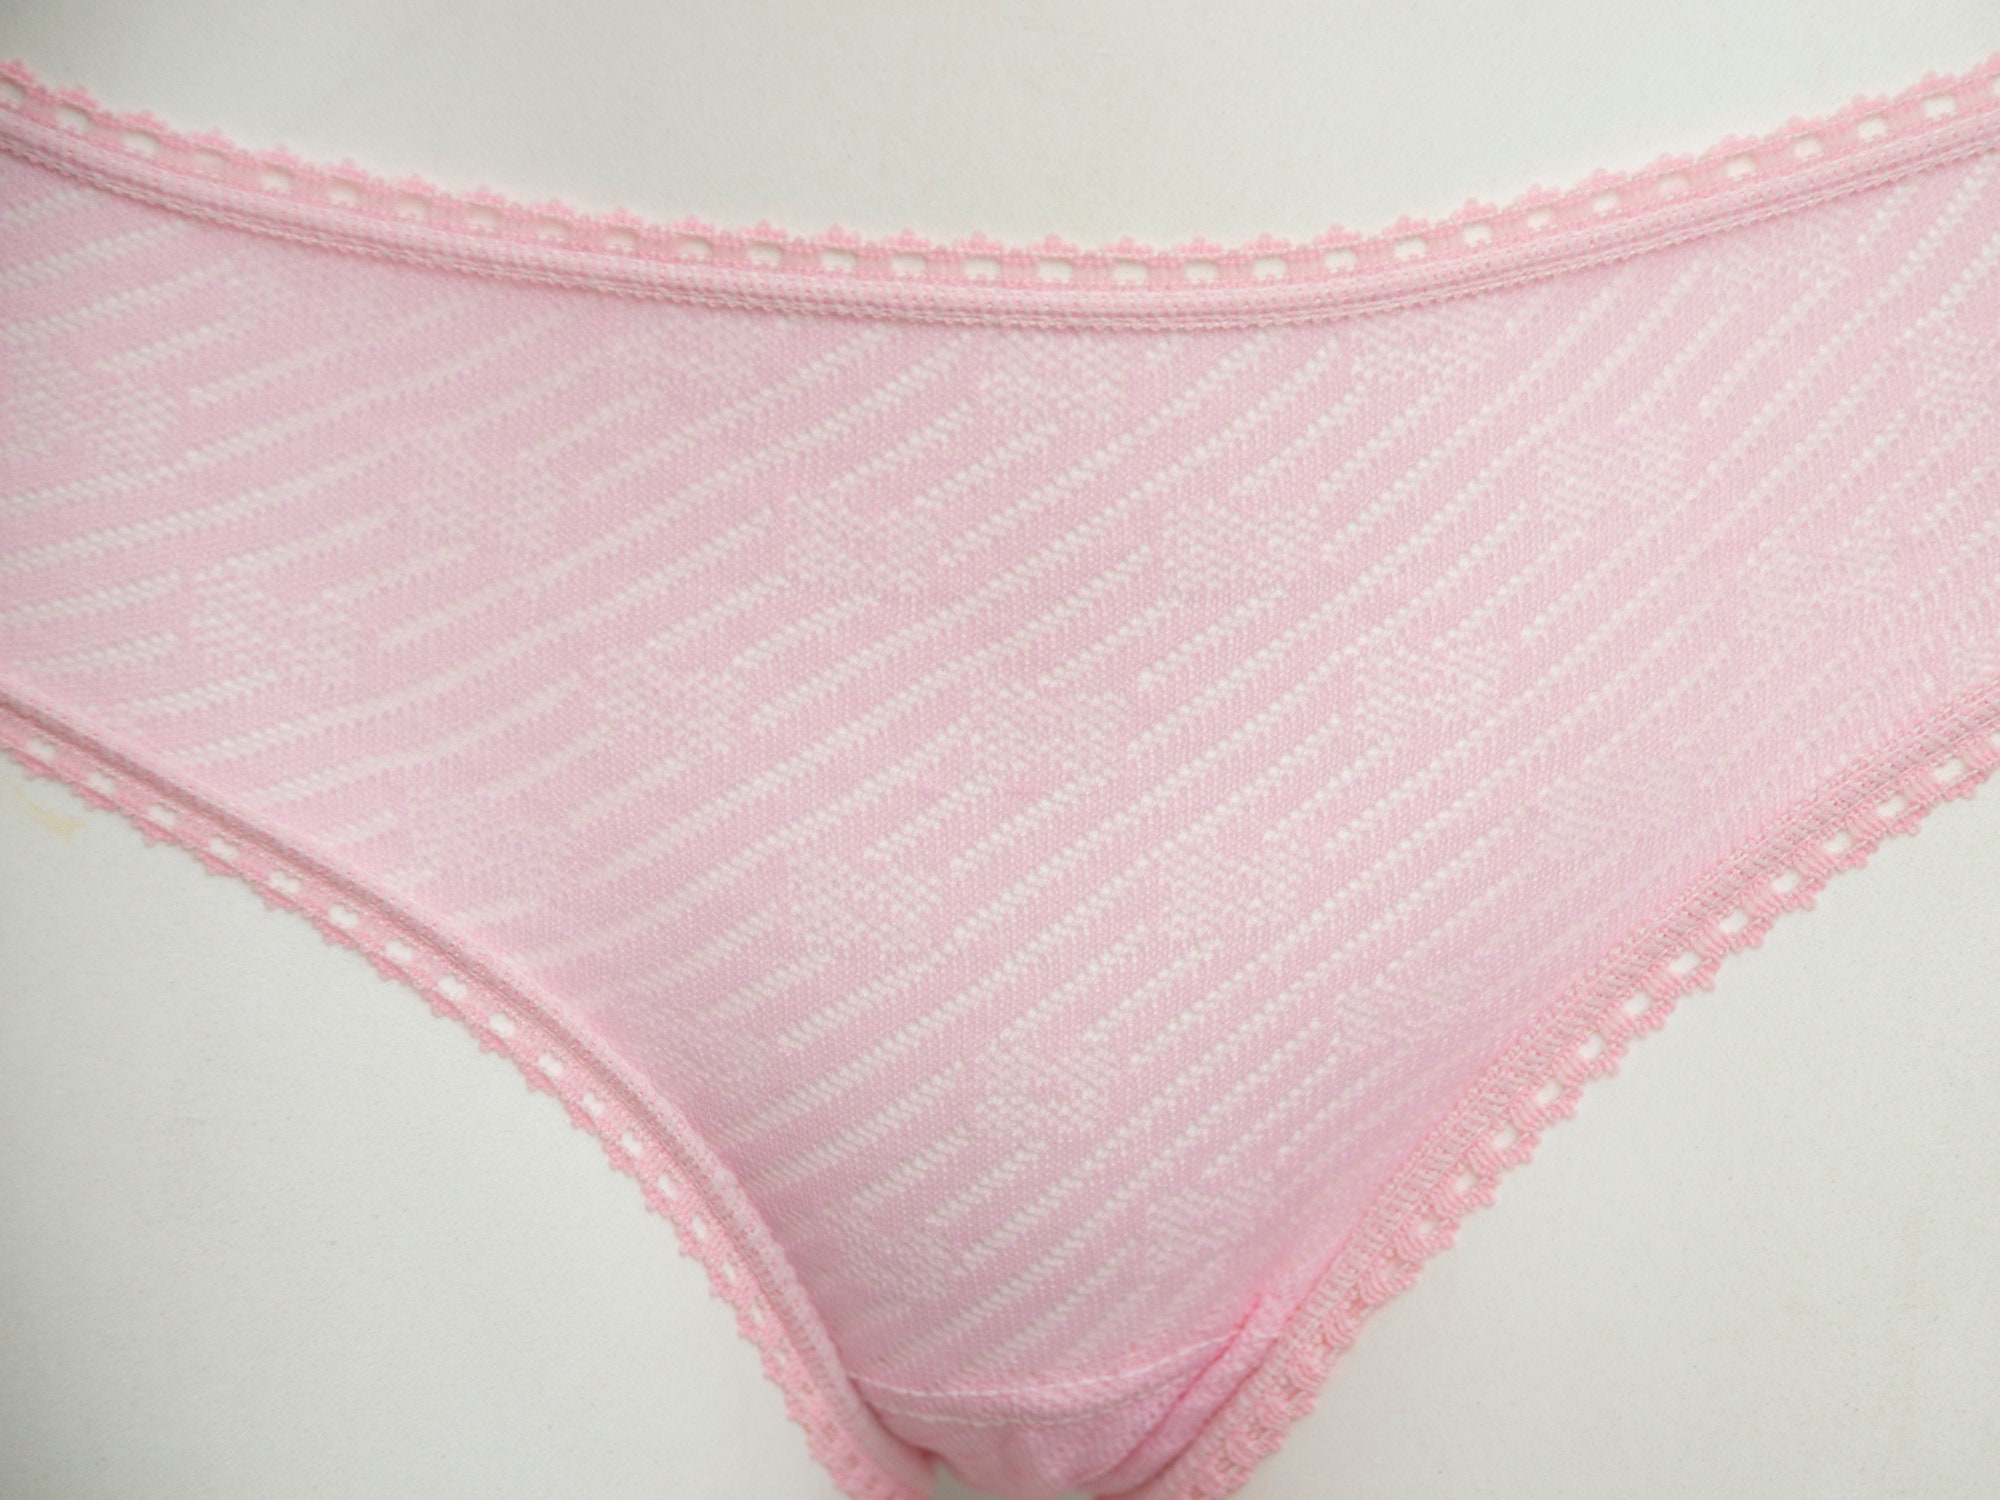 Sheer Pink Panties.